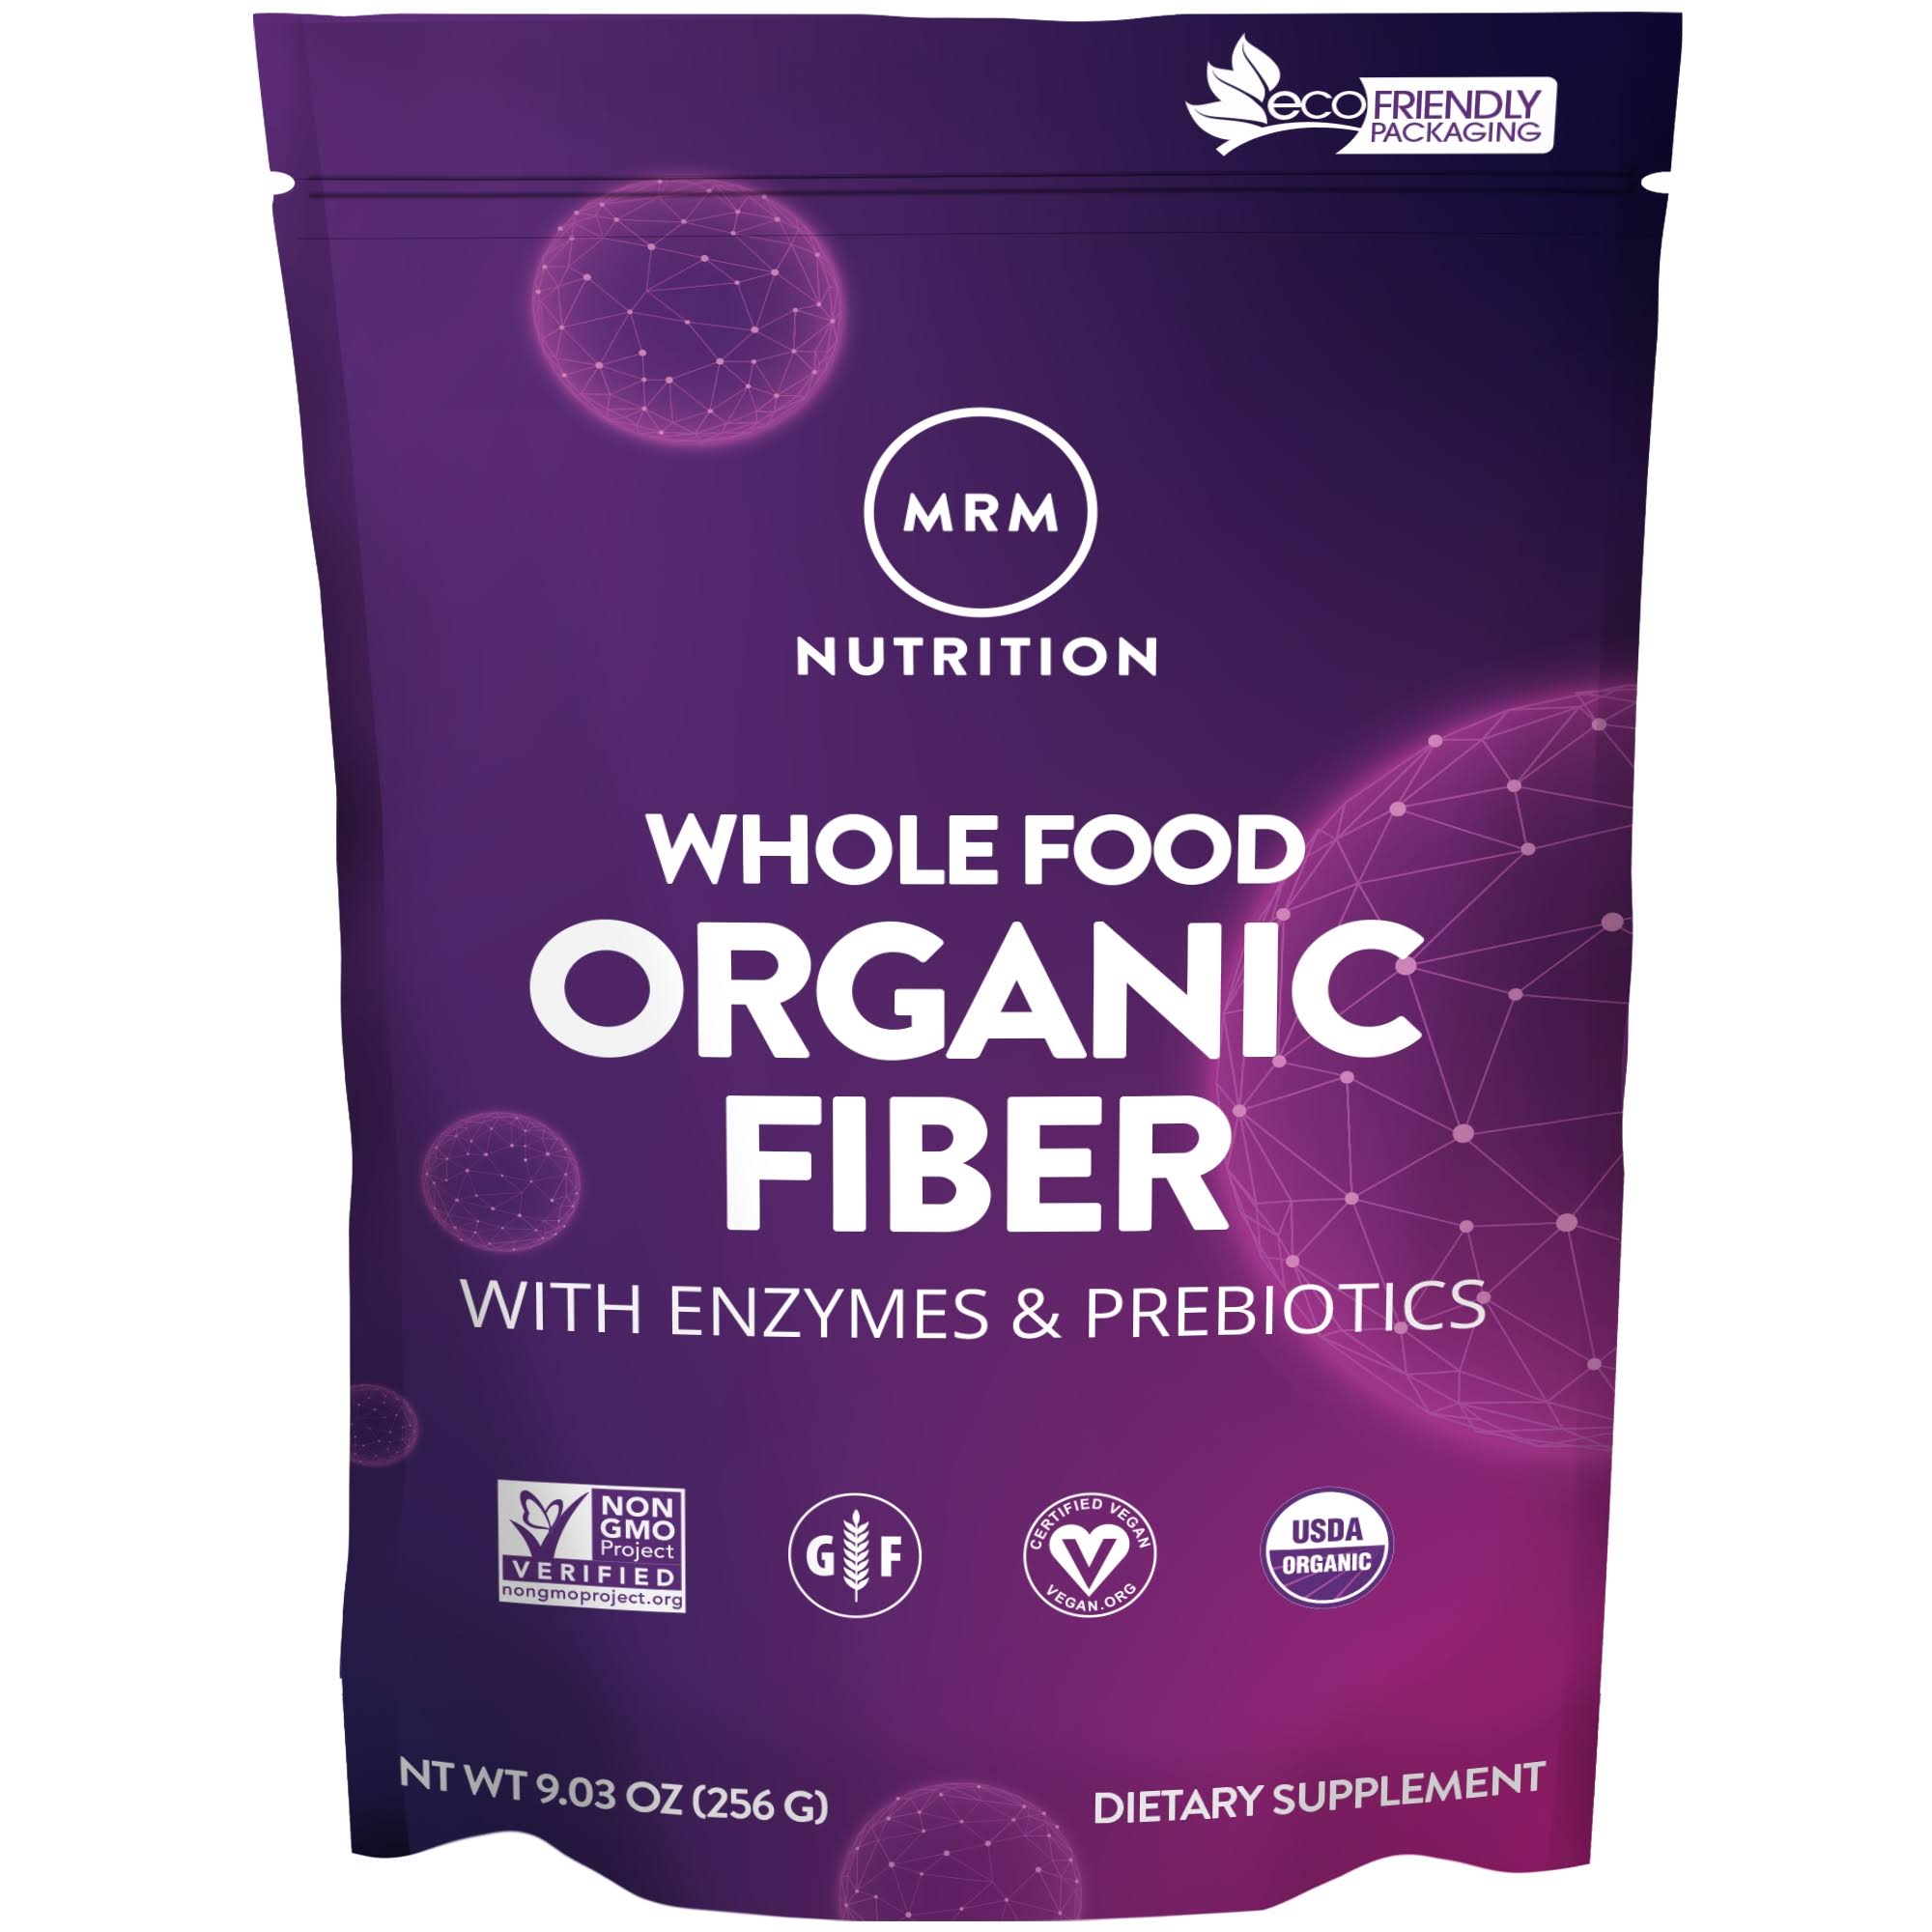 MRM Whole Food Organic Fiber Dietary Supplement - 256g